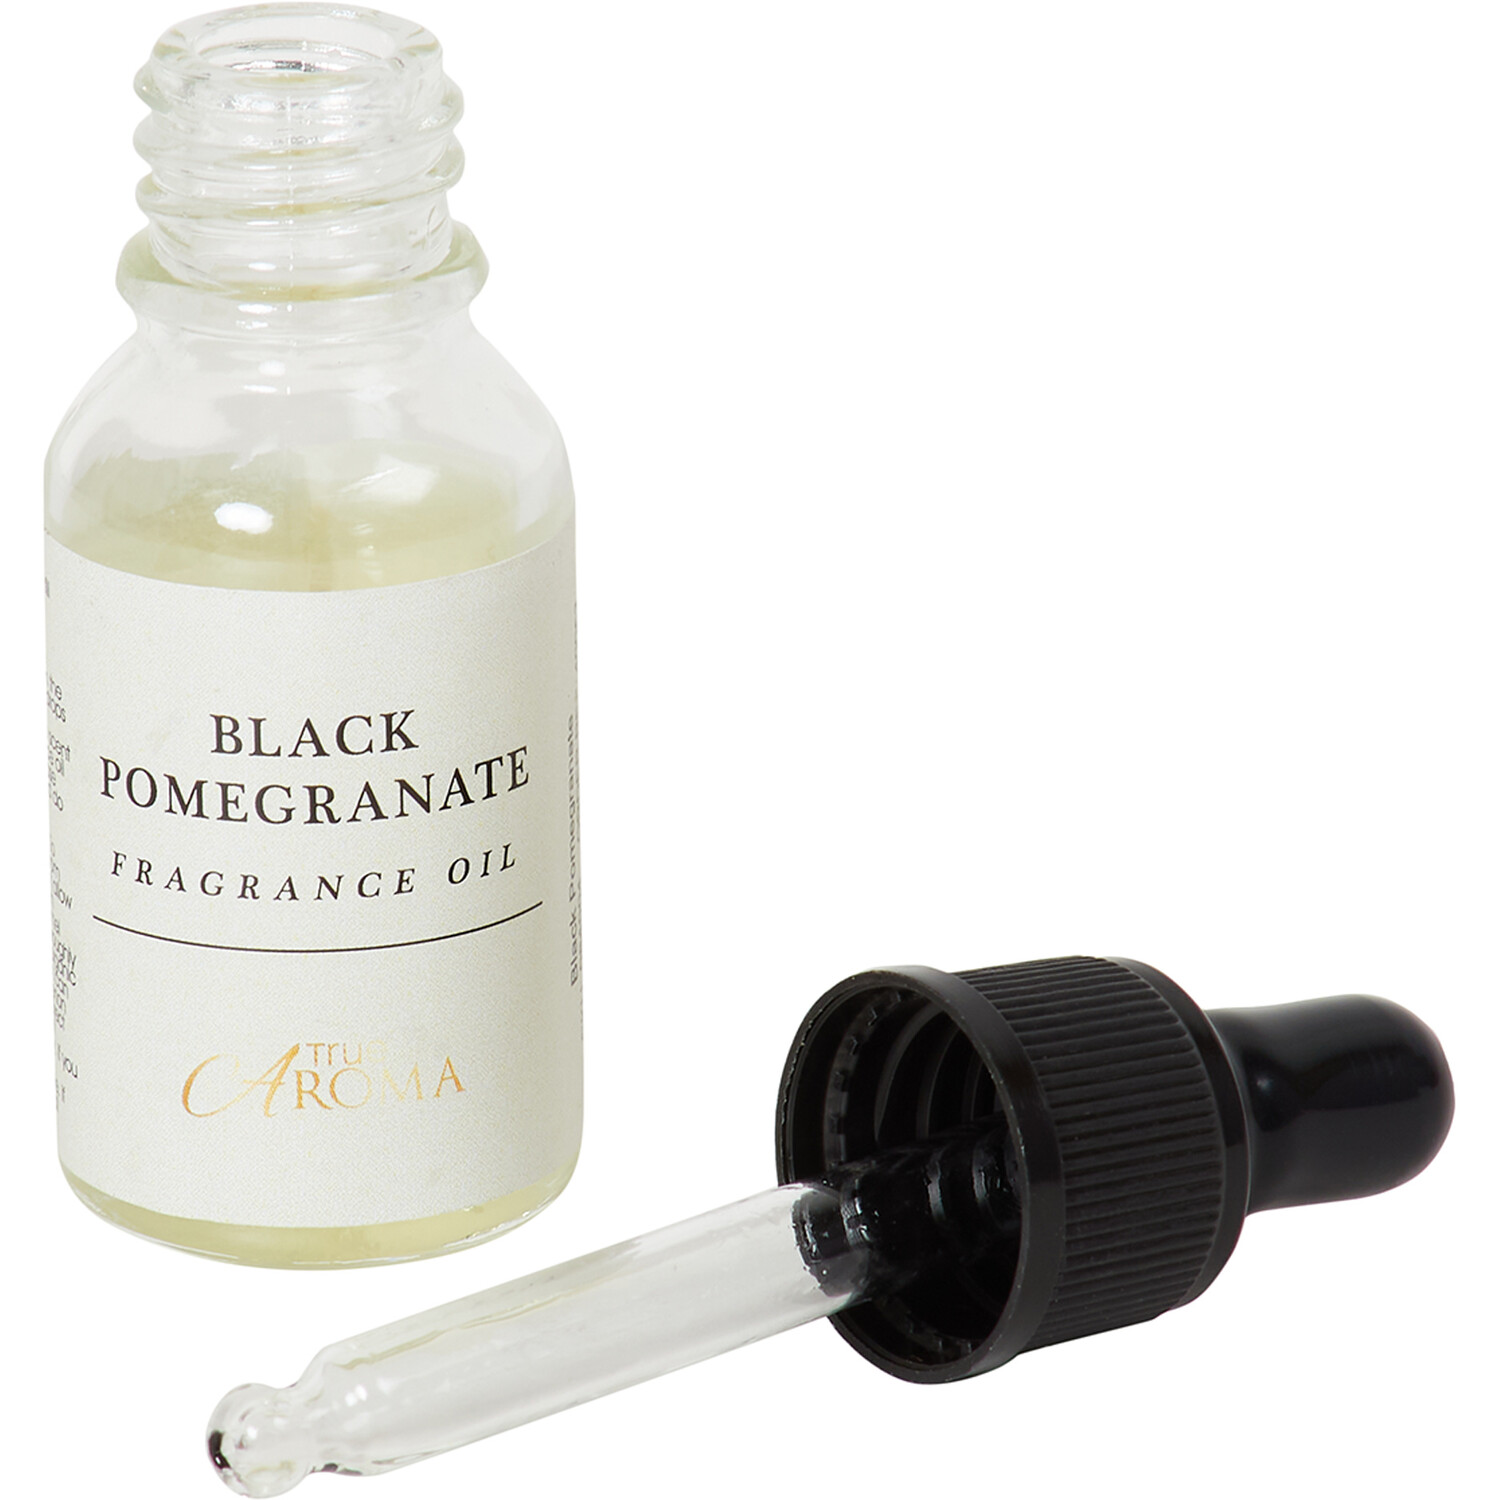 Black Pomegranate Fragranced Oil Image 2